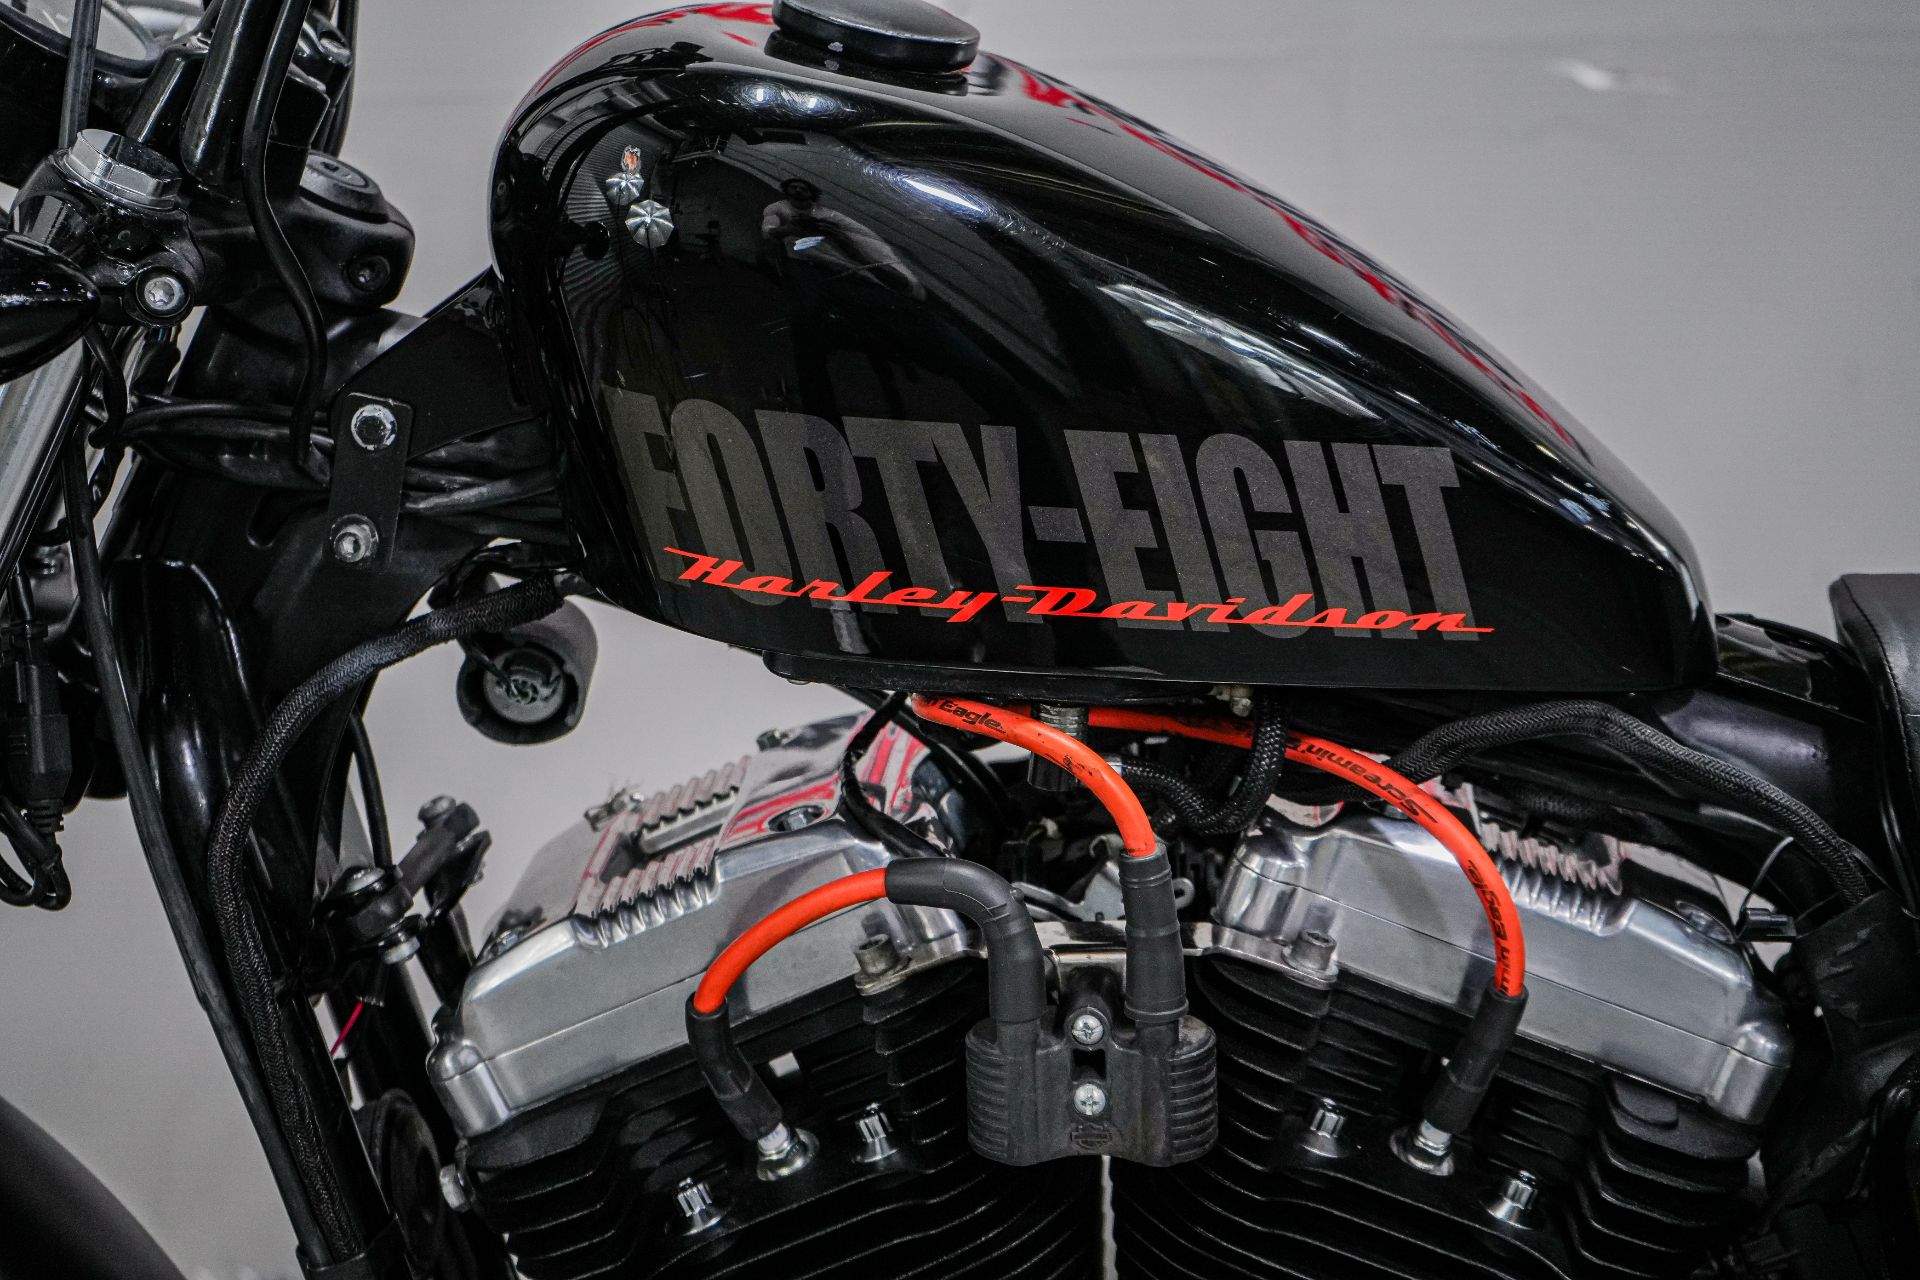 2015 Harley-Davidson Forty-Eight® in Sacramento, California - Photo 5